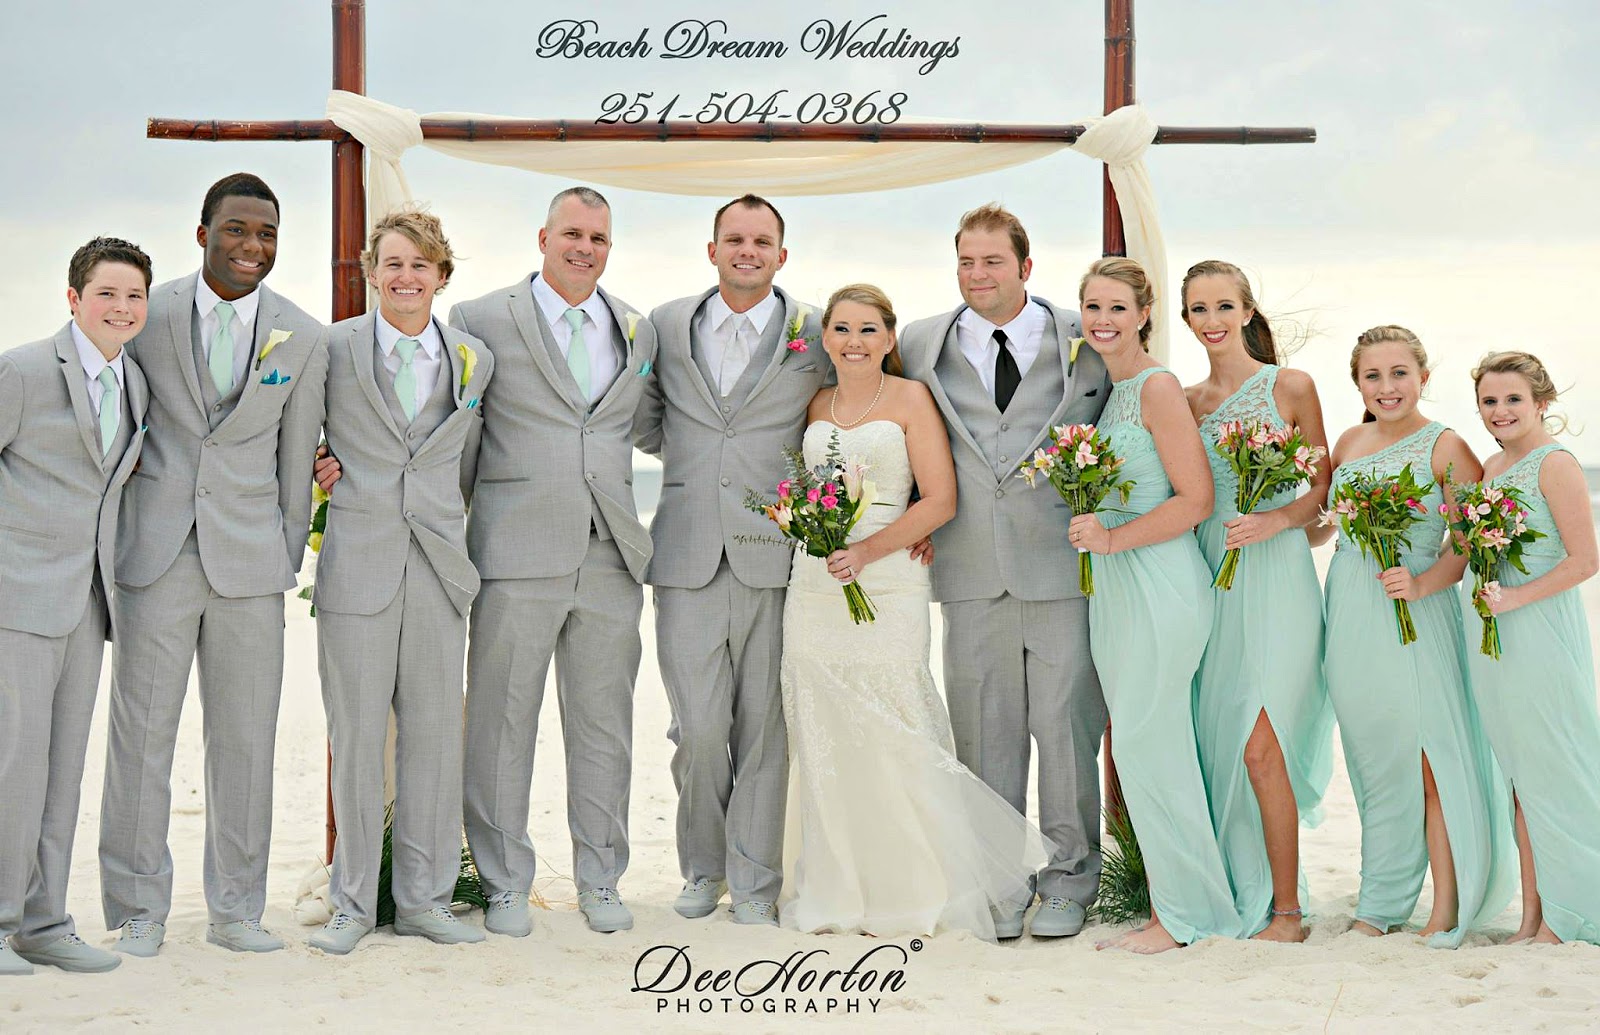 Beach Dream Weddings Llc 251 504 0368 Alabama Beach Weddings